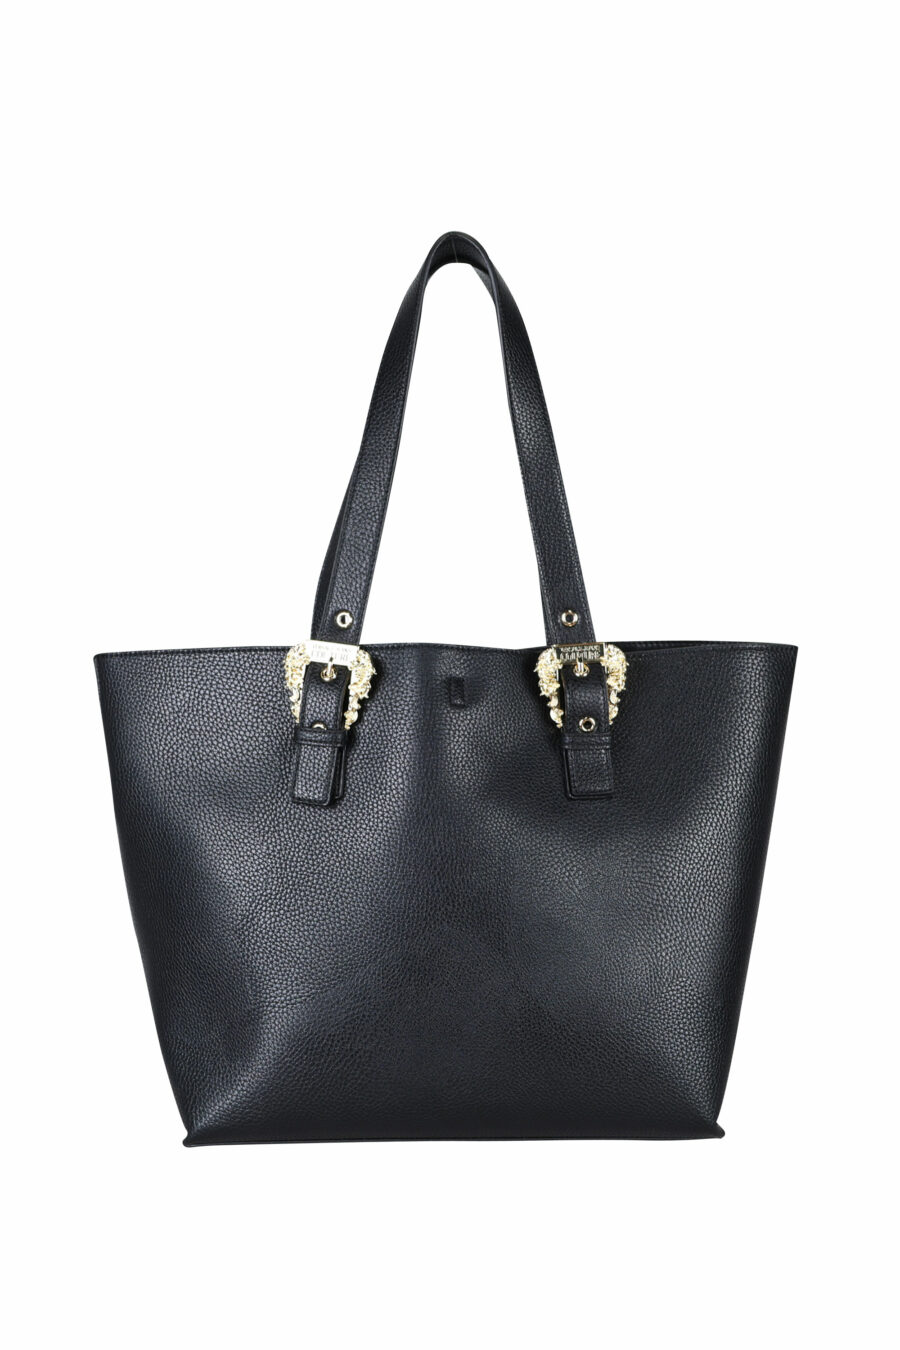 Black shopper bag with baroque buckles - 8052019407709